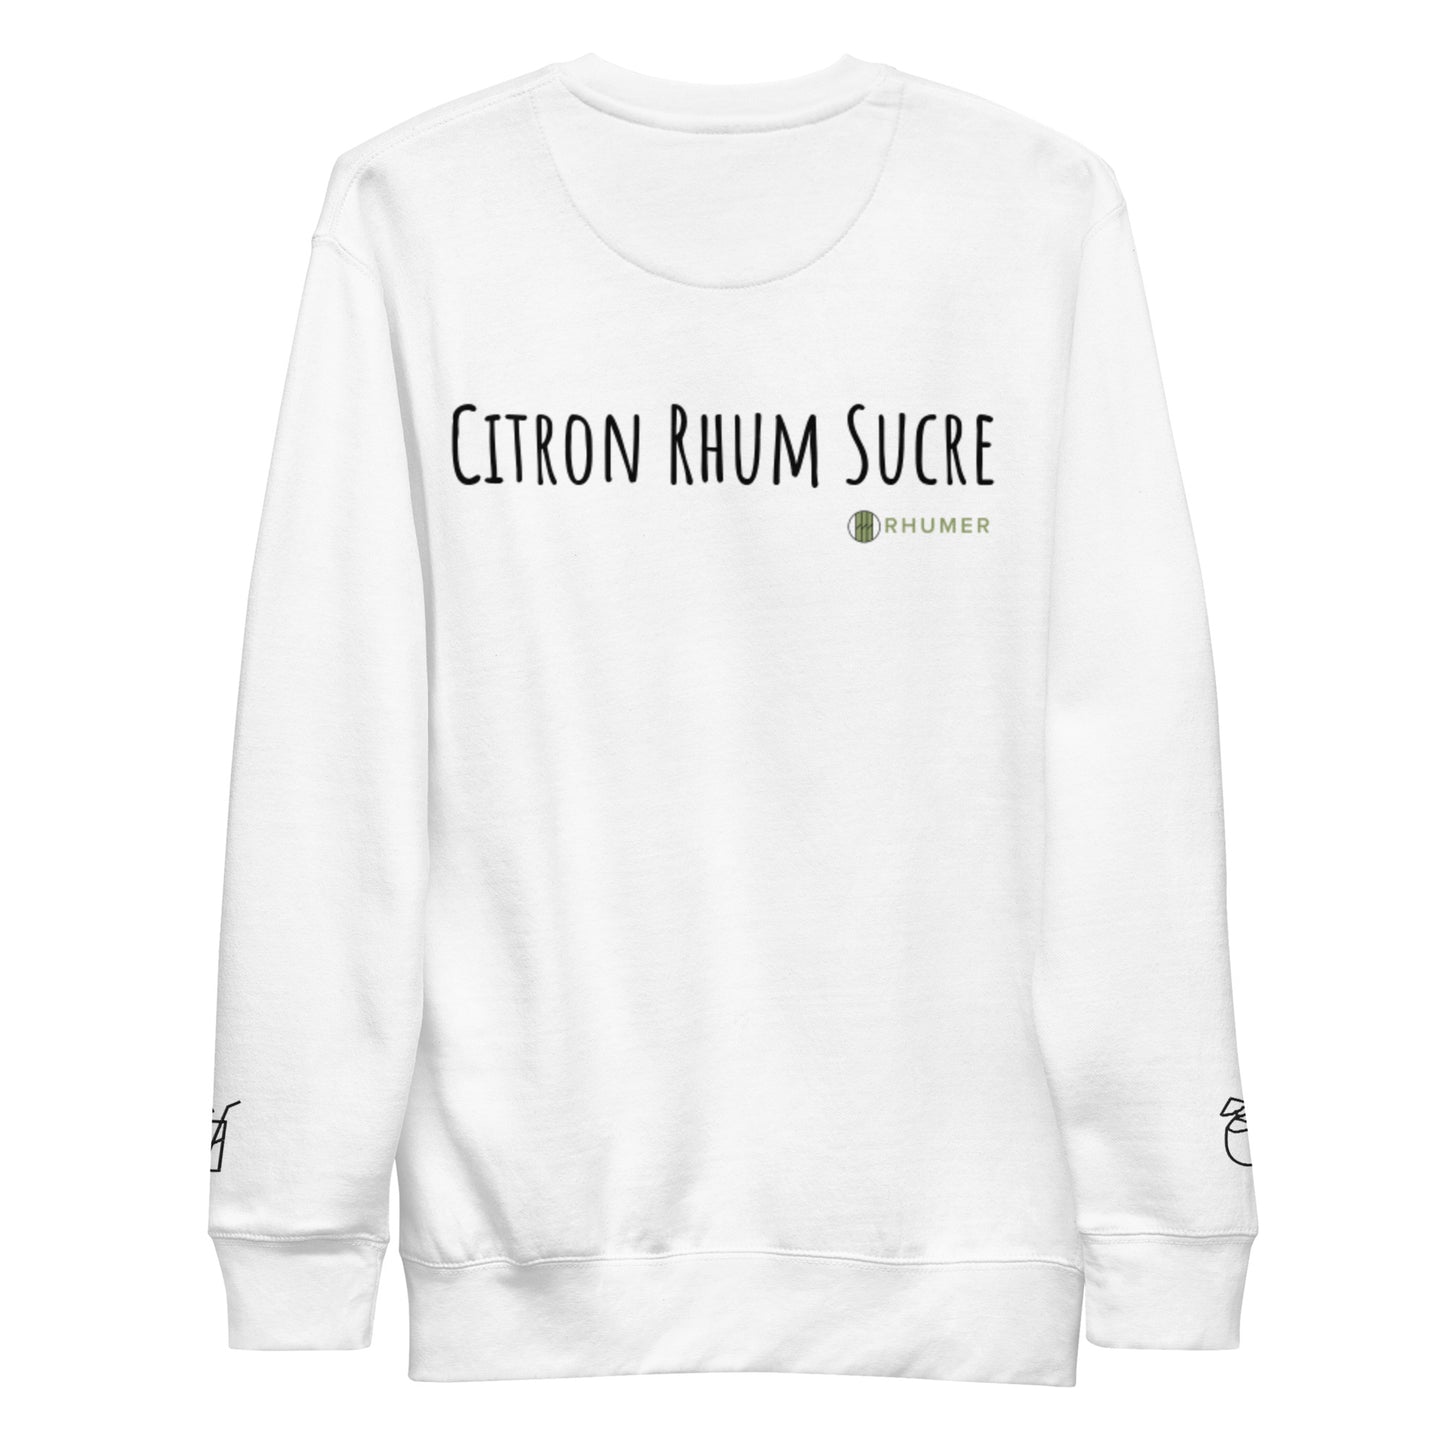 Sweatshirt Citron Rhum Sucre • Rhumer